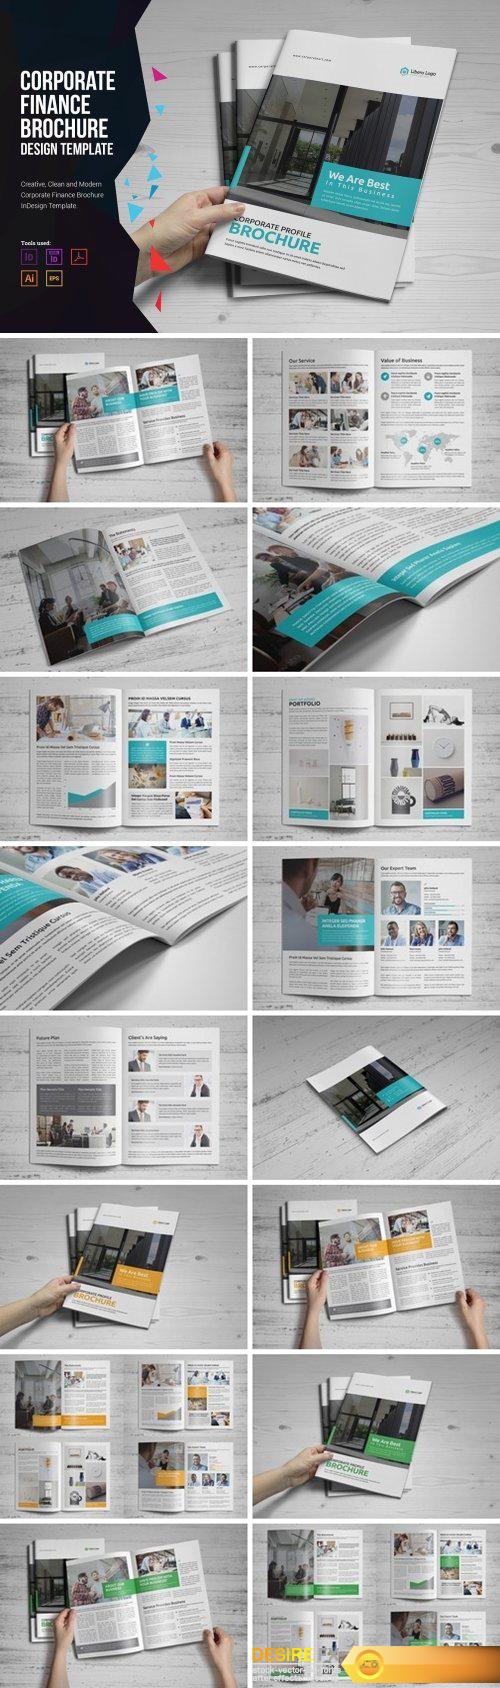 CM - Corporate Brochure Design v2 2171025